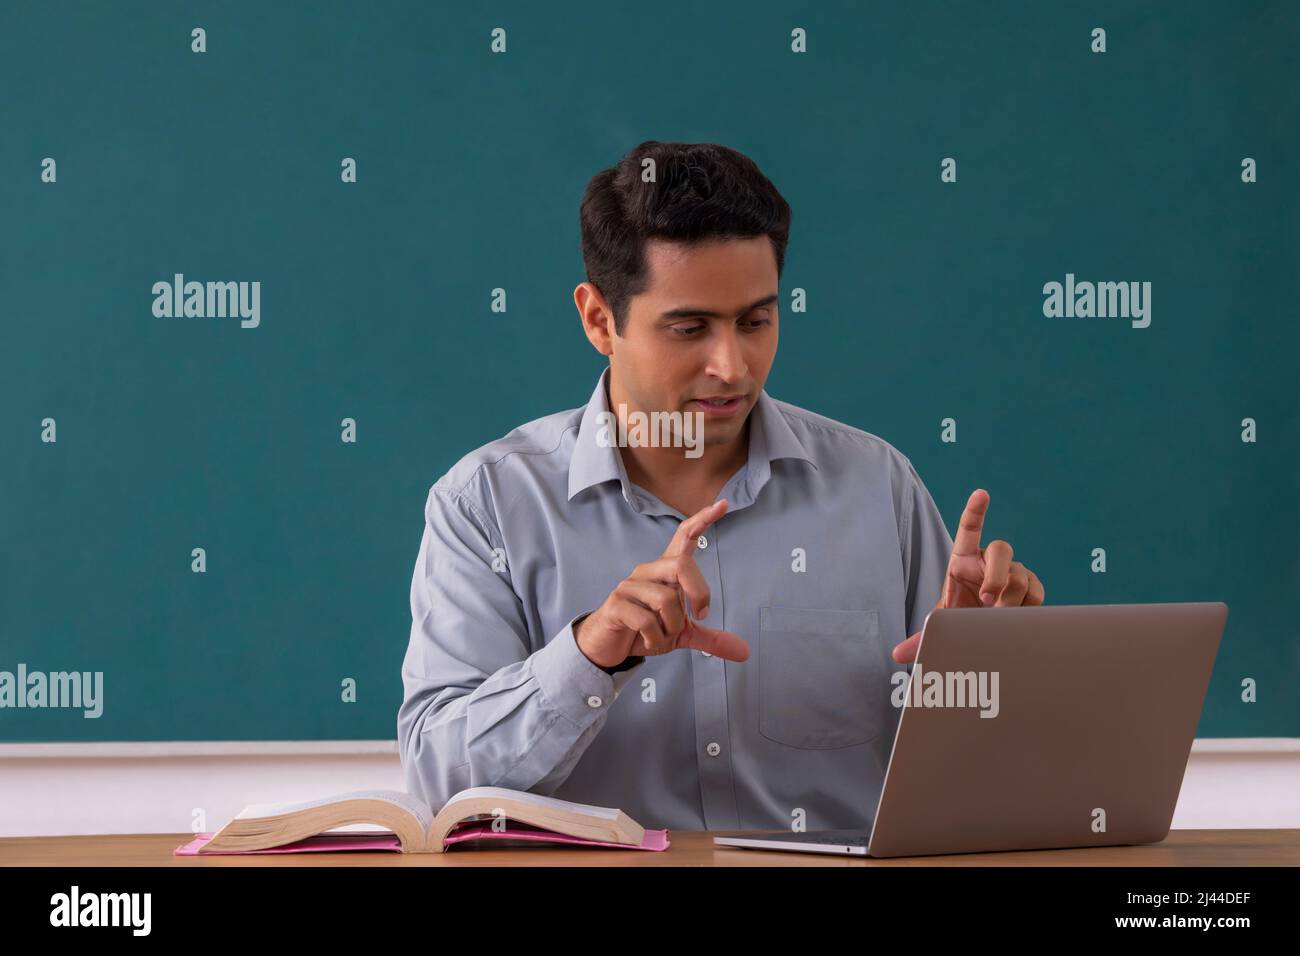 School teacher conducting an online class by using laptop Stock Photo